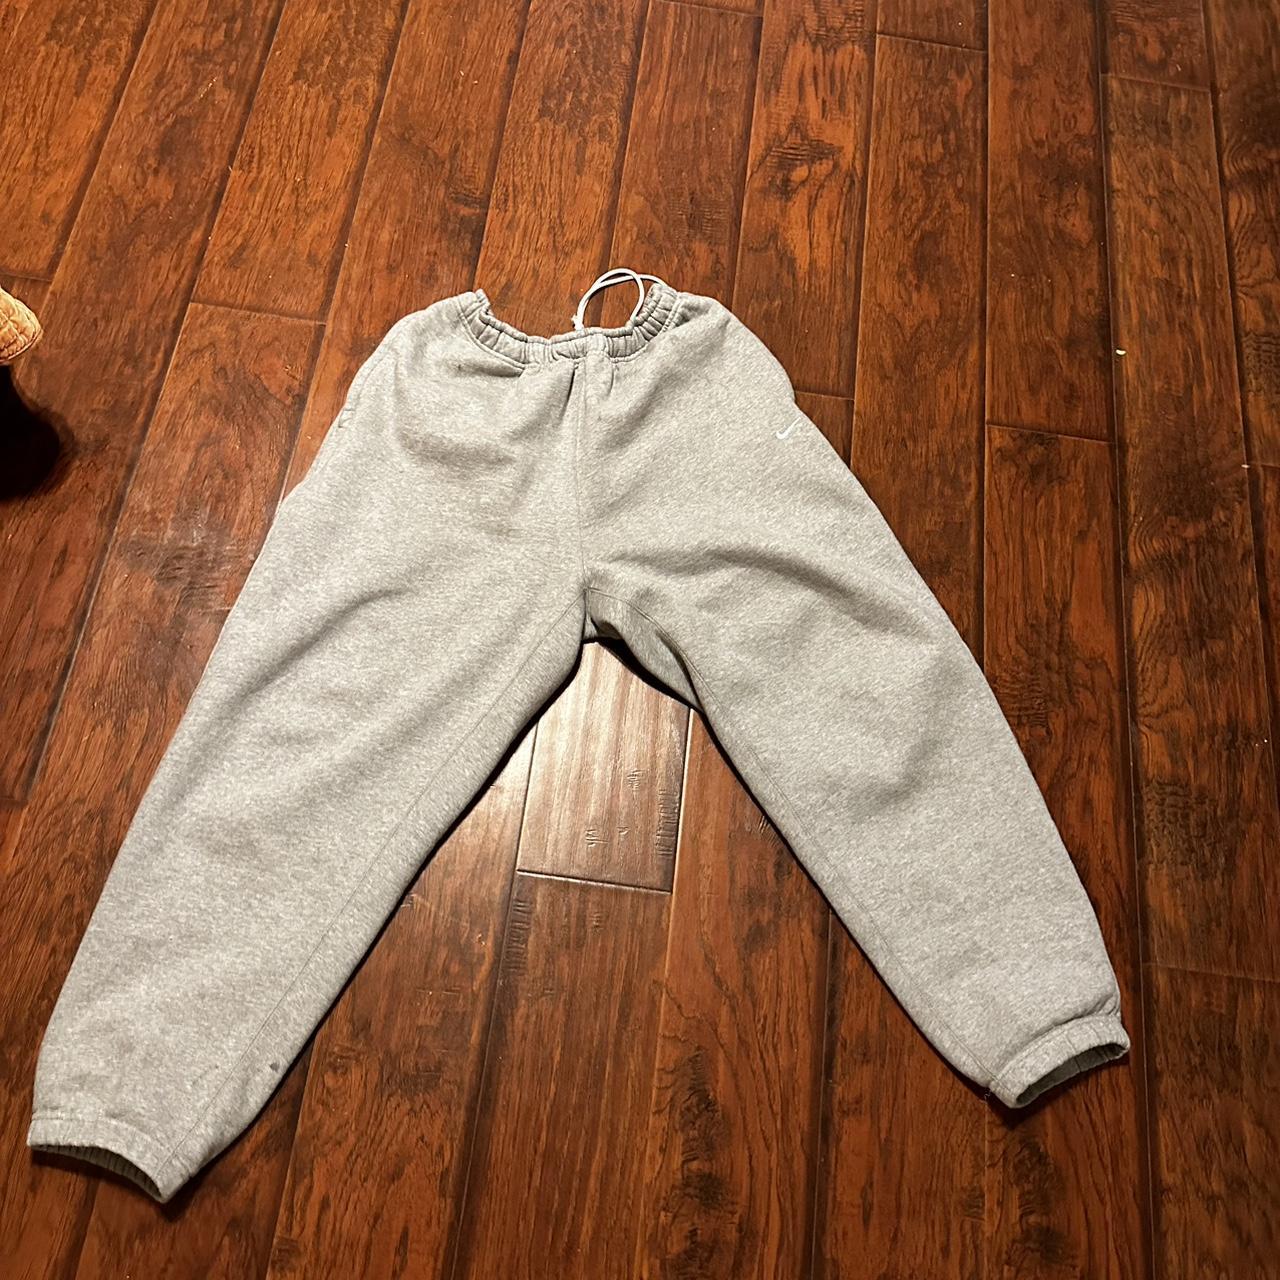 XL grey nike sweats with zipper - Depop